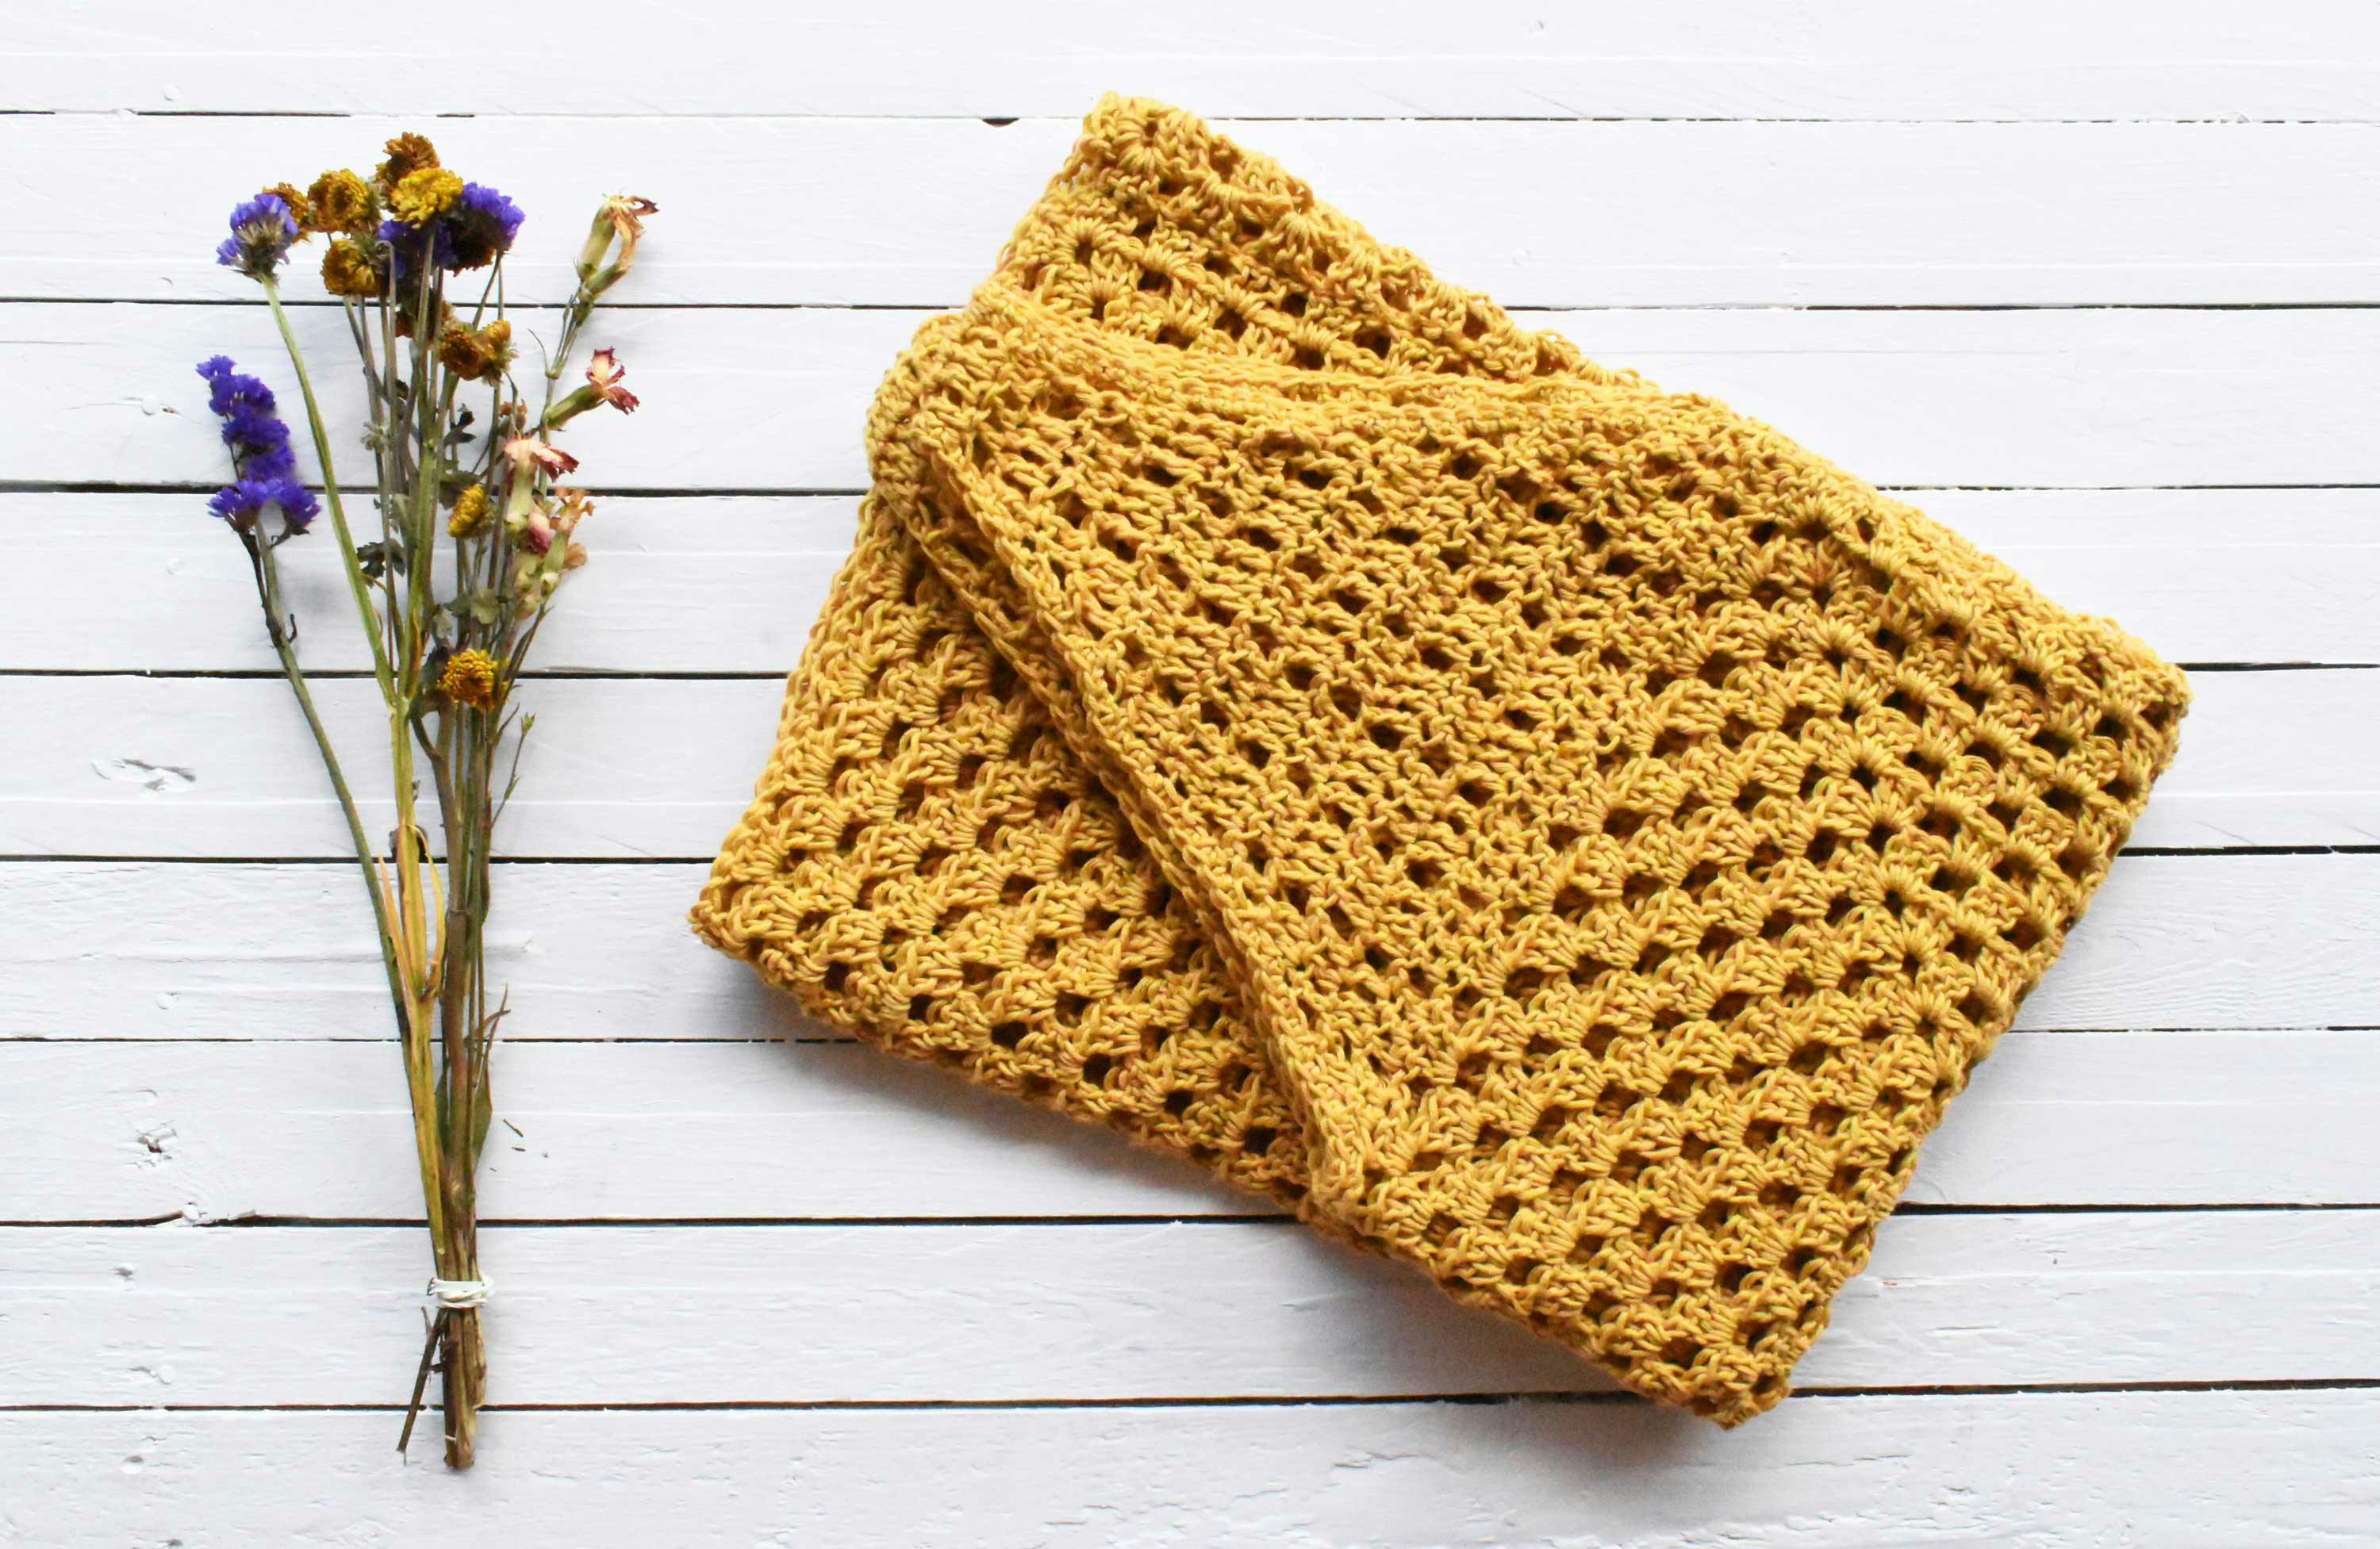 Crochet Your Summer Wardrobe
